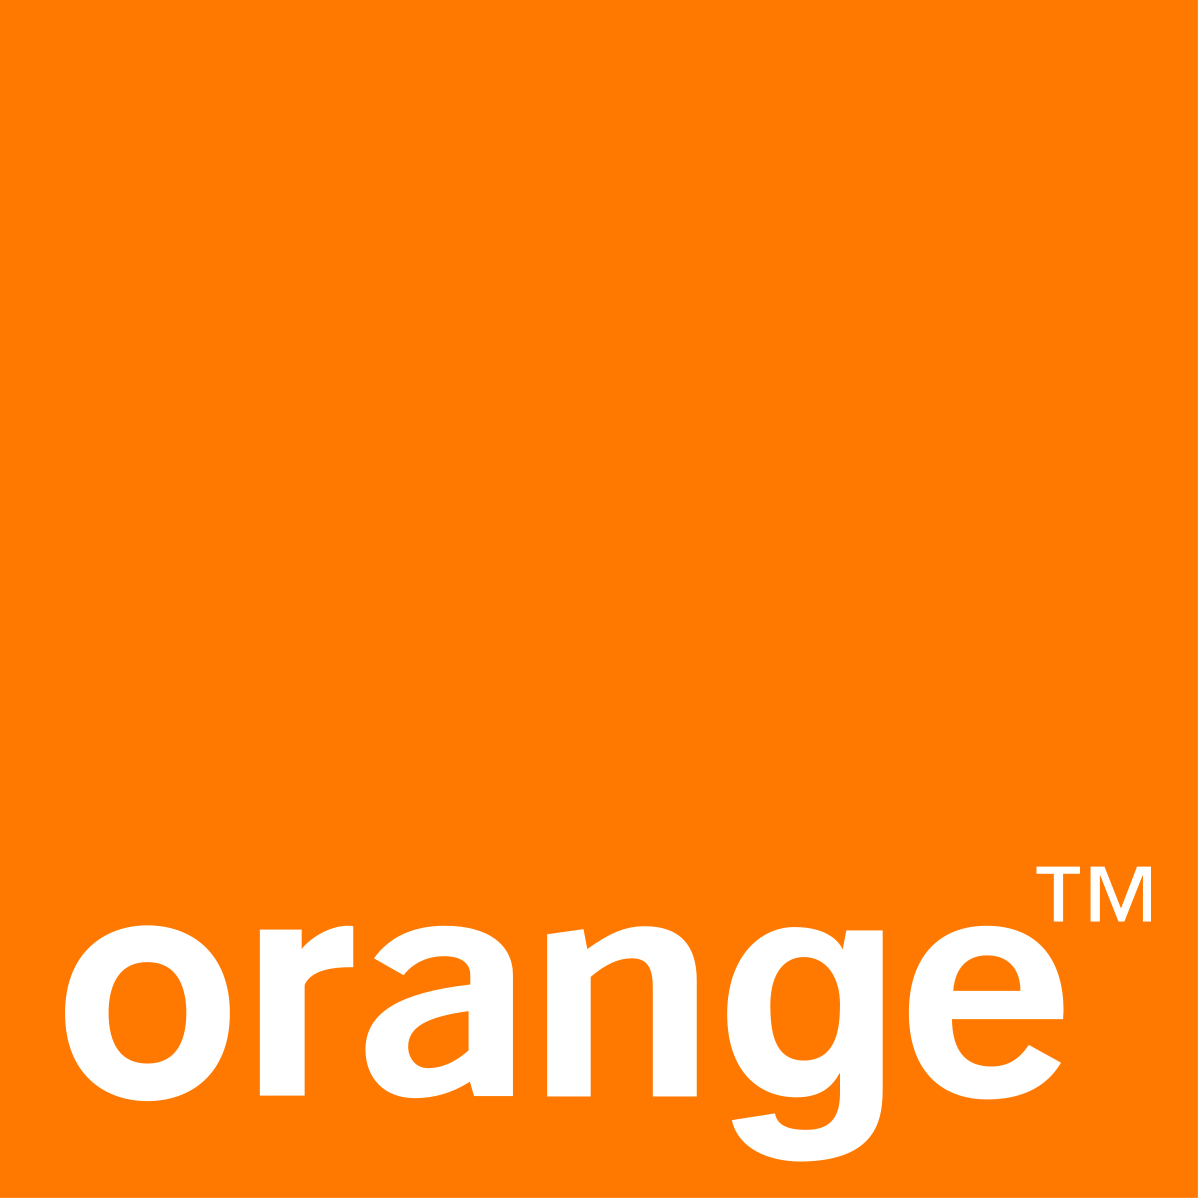 orange s a